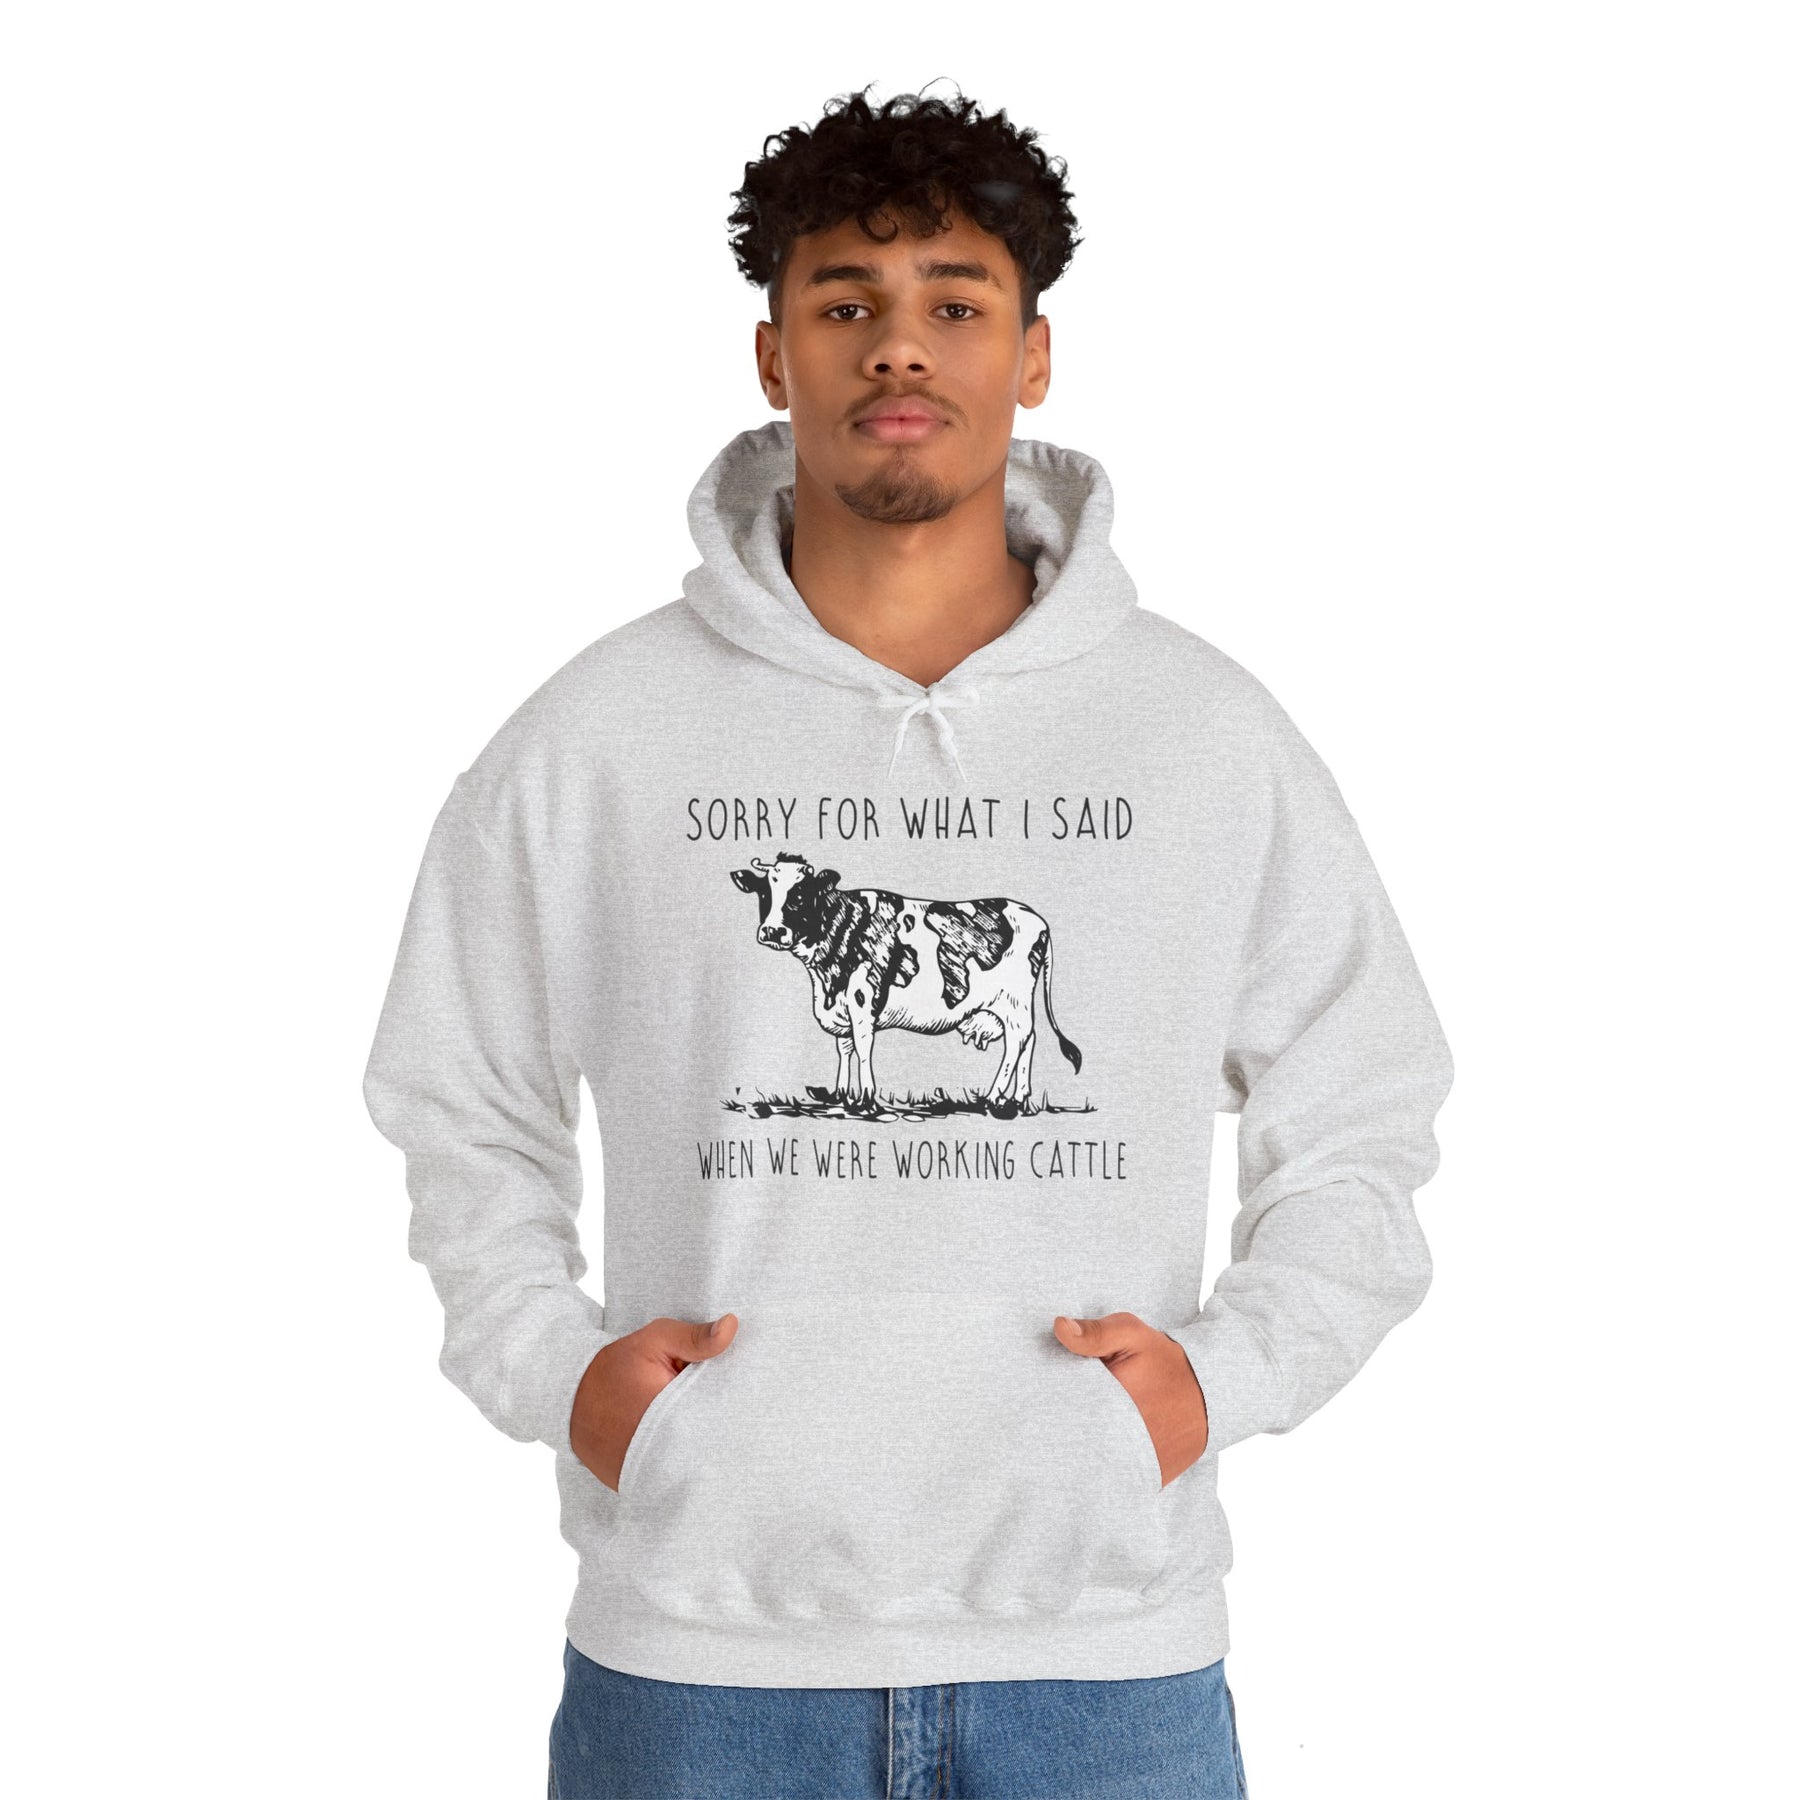 Cow Lover Hoodies / Cow Addict Hoodies